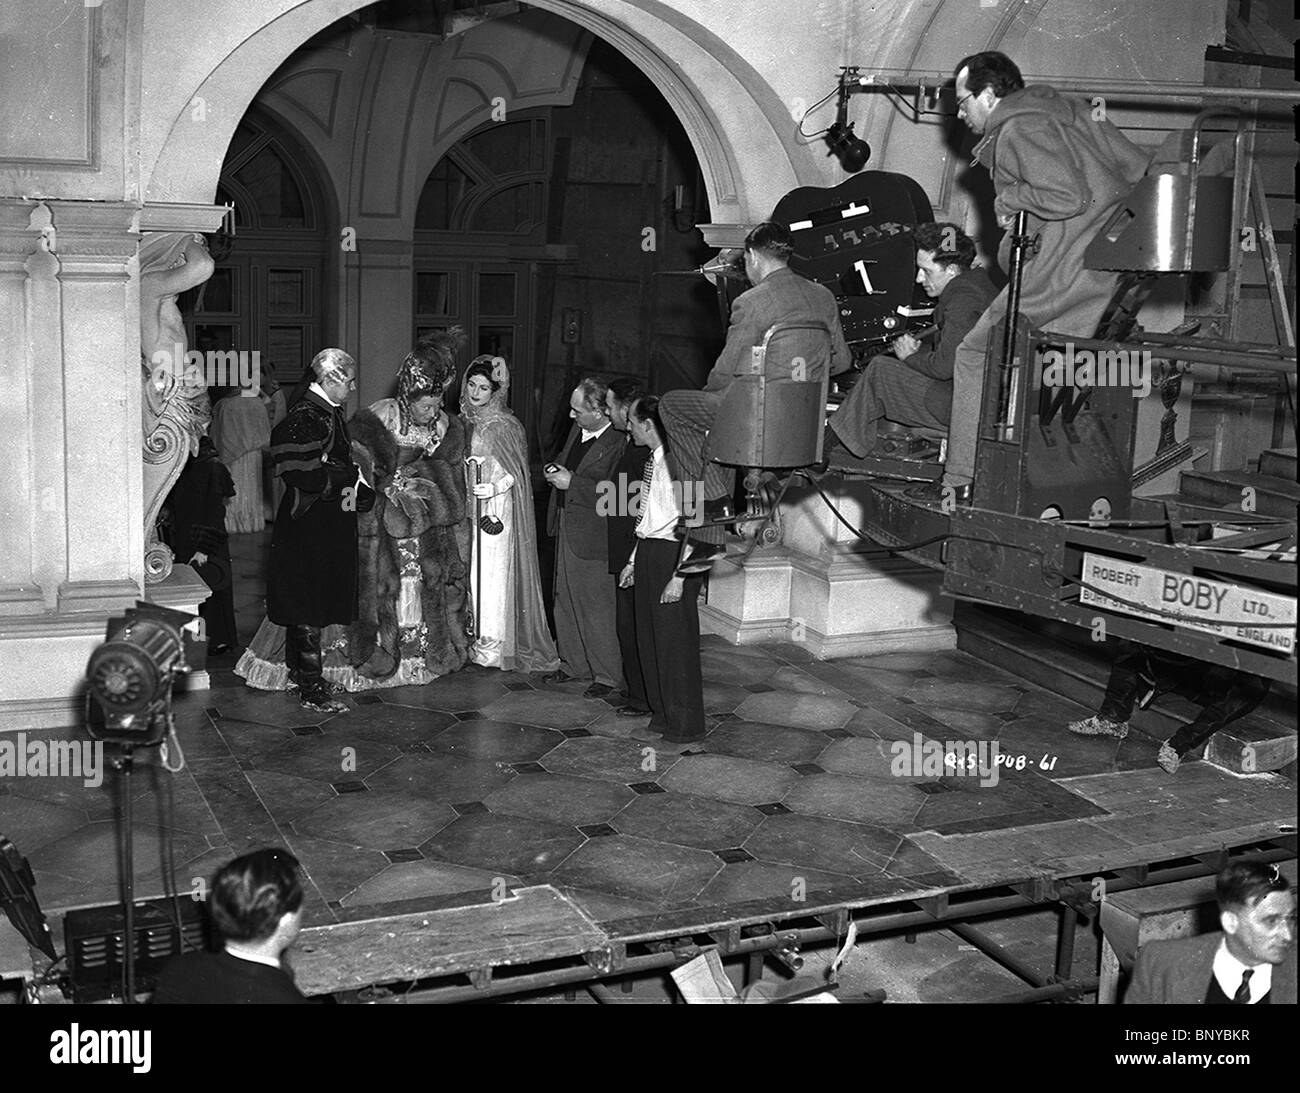 THE QUEEN OF SPADES (1949) THOROLD DICKINSON (DIR) 003 MOVIESTORE ...